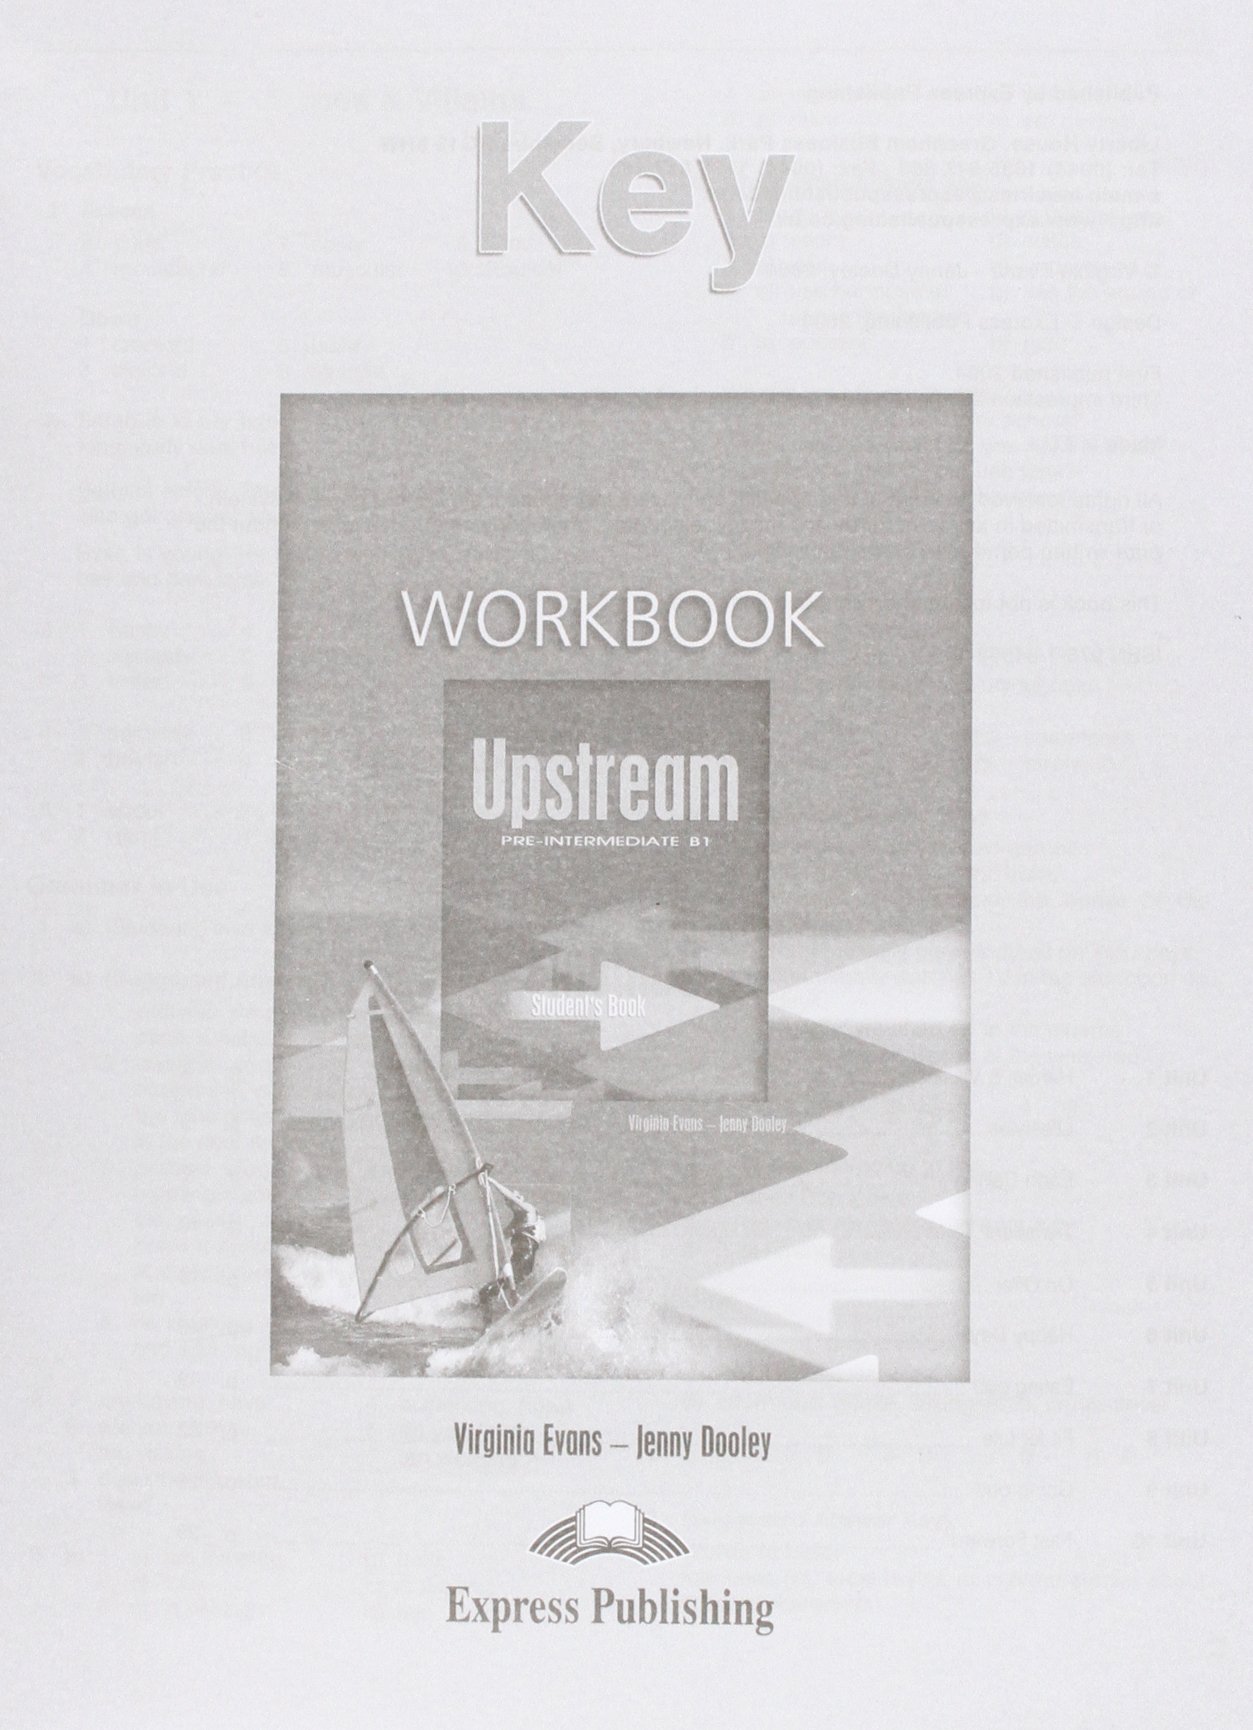 UPSTREAM PRE-INTERMEDIATE Workbook answers